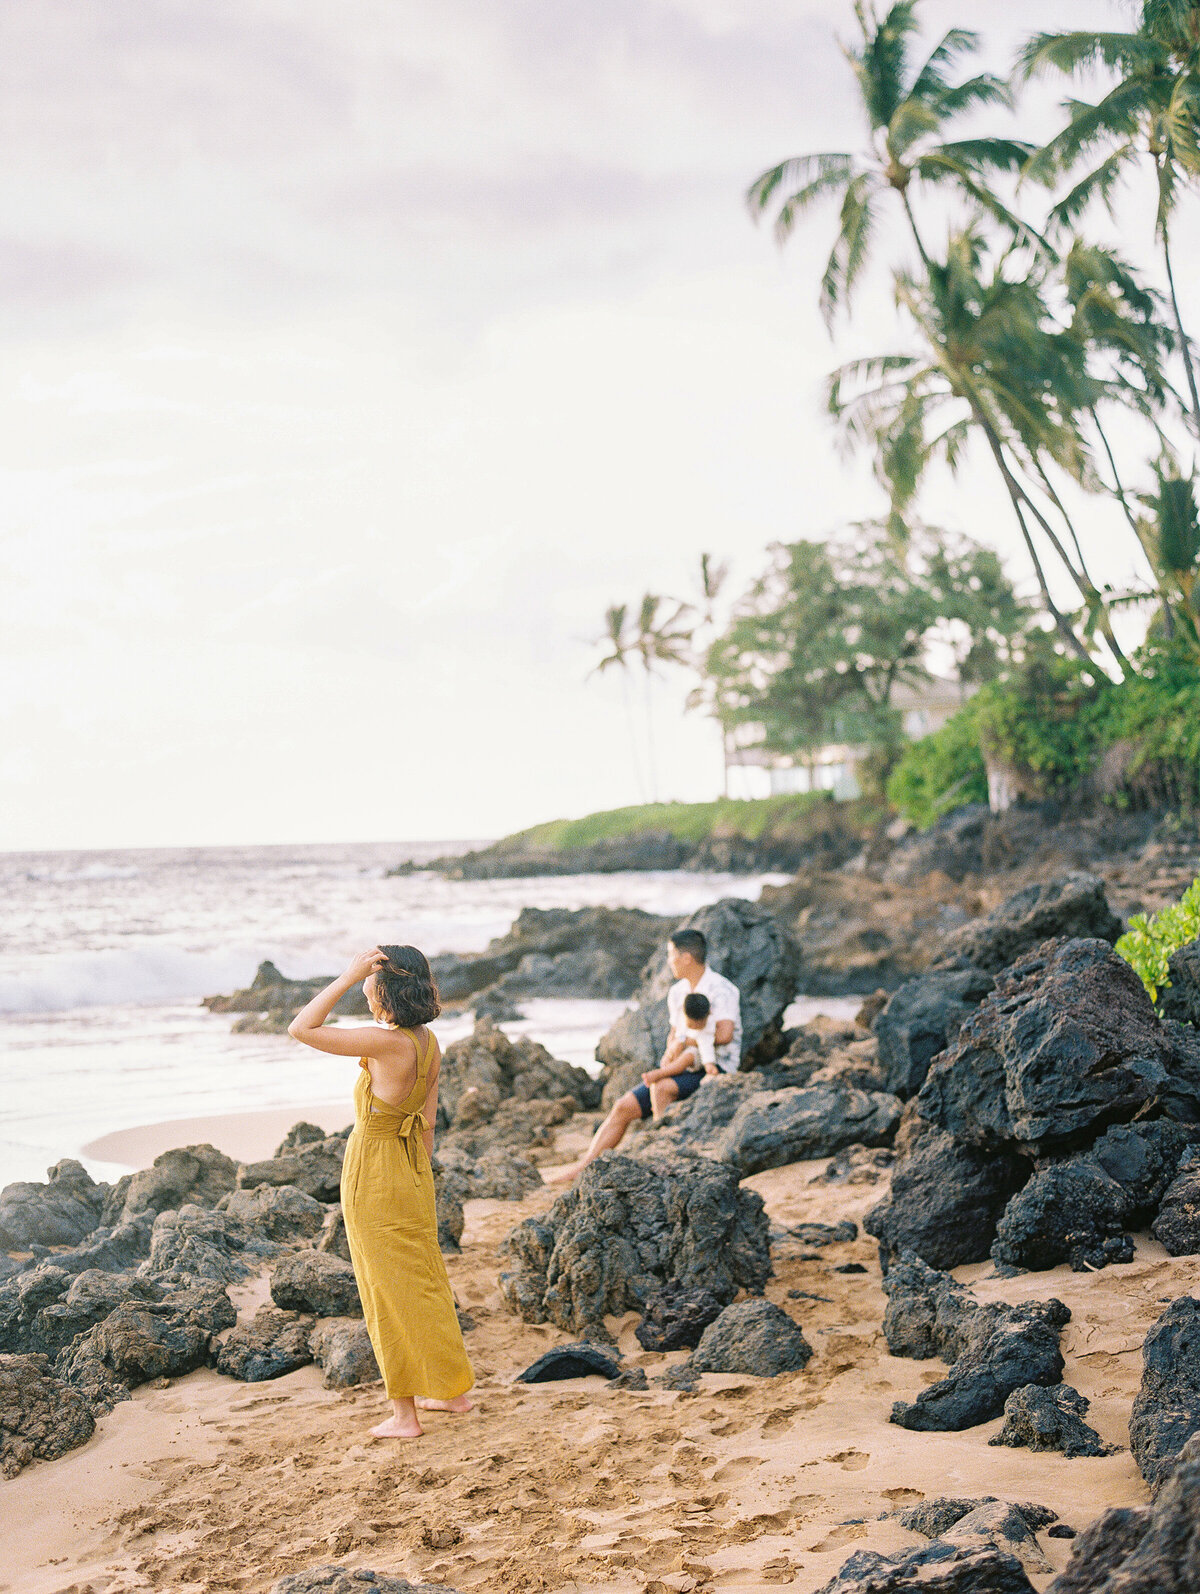 LeeFamilyfinals | Hawaii Wedding & Lifestyle Photography | Ashley Goodwin Photography